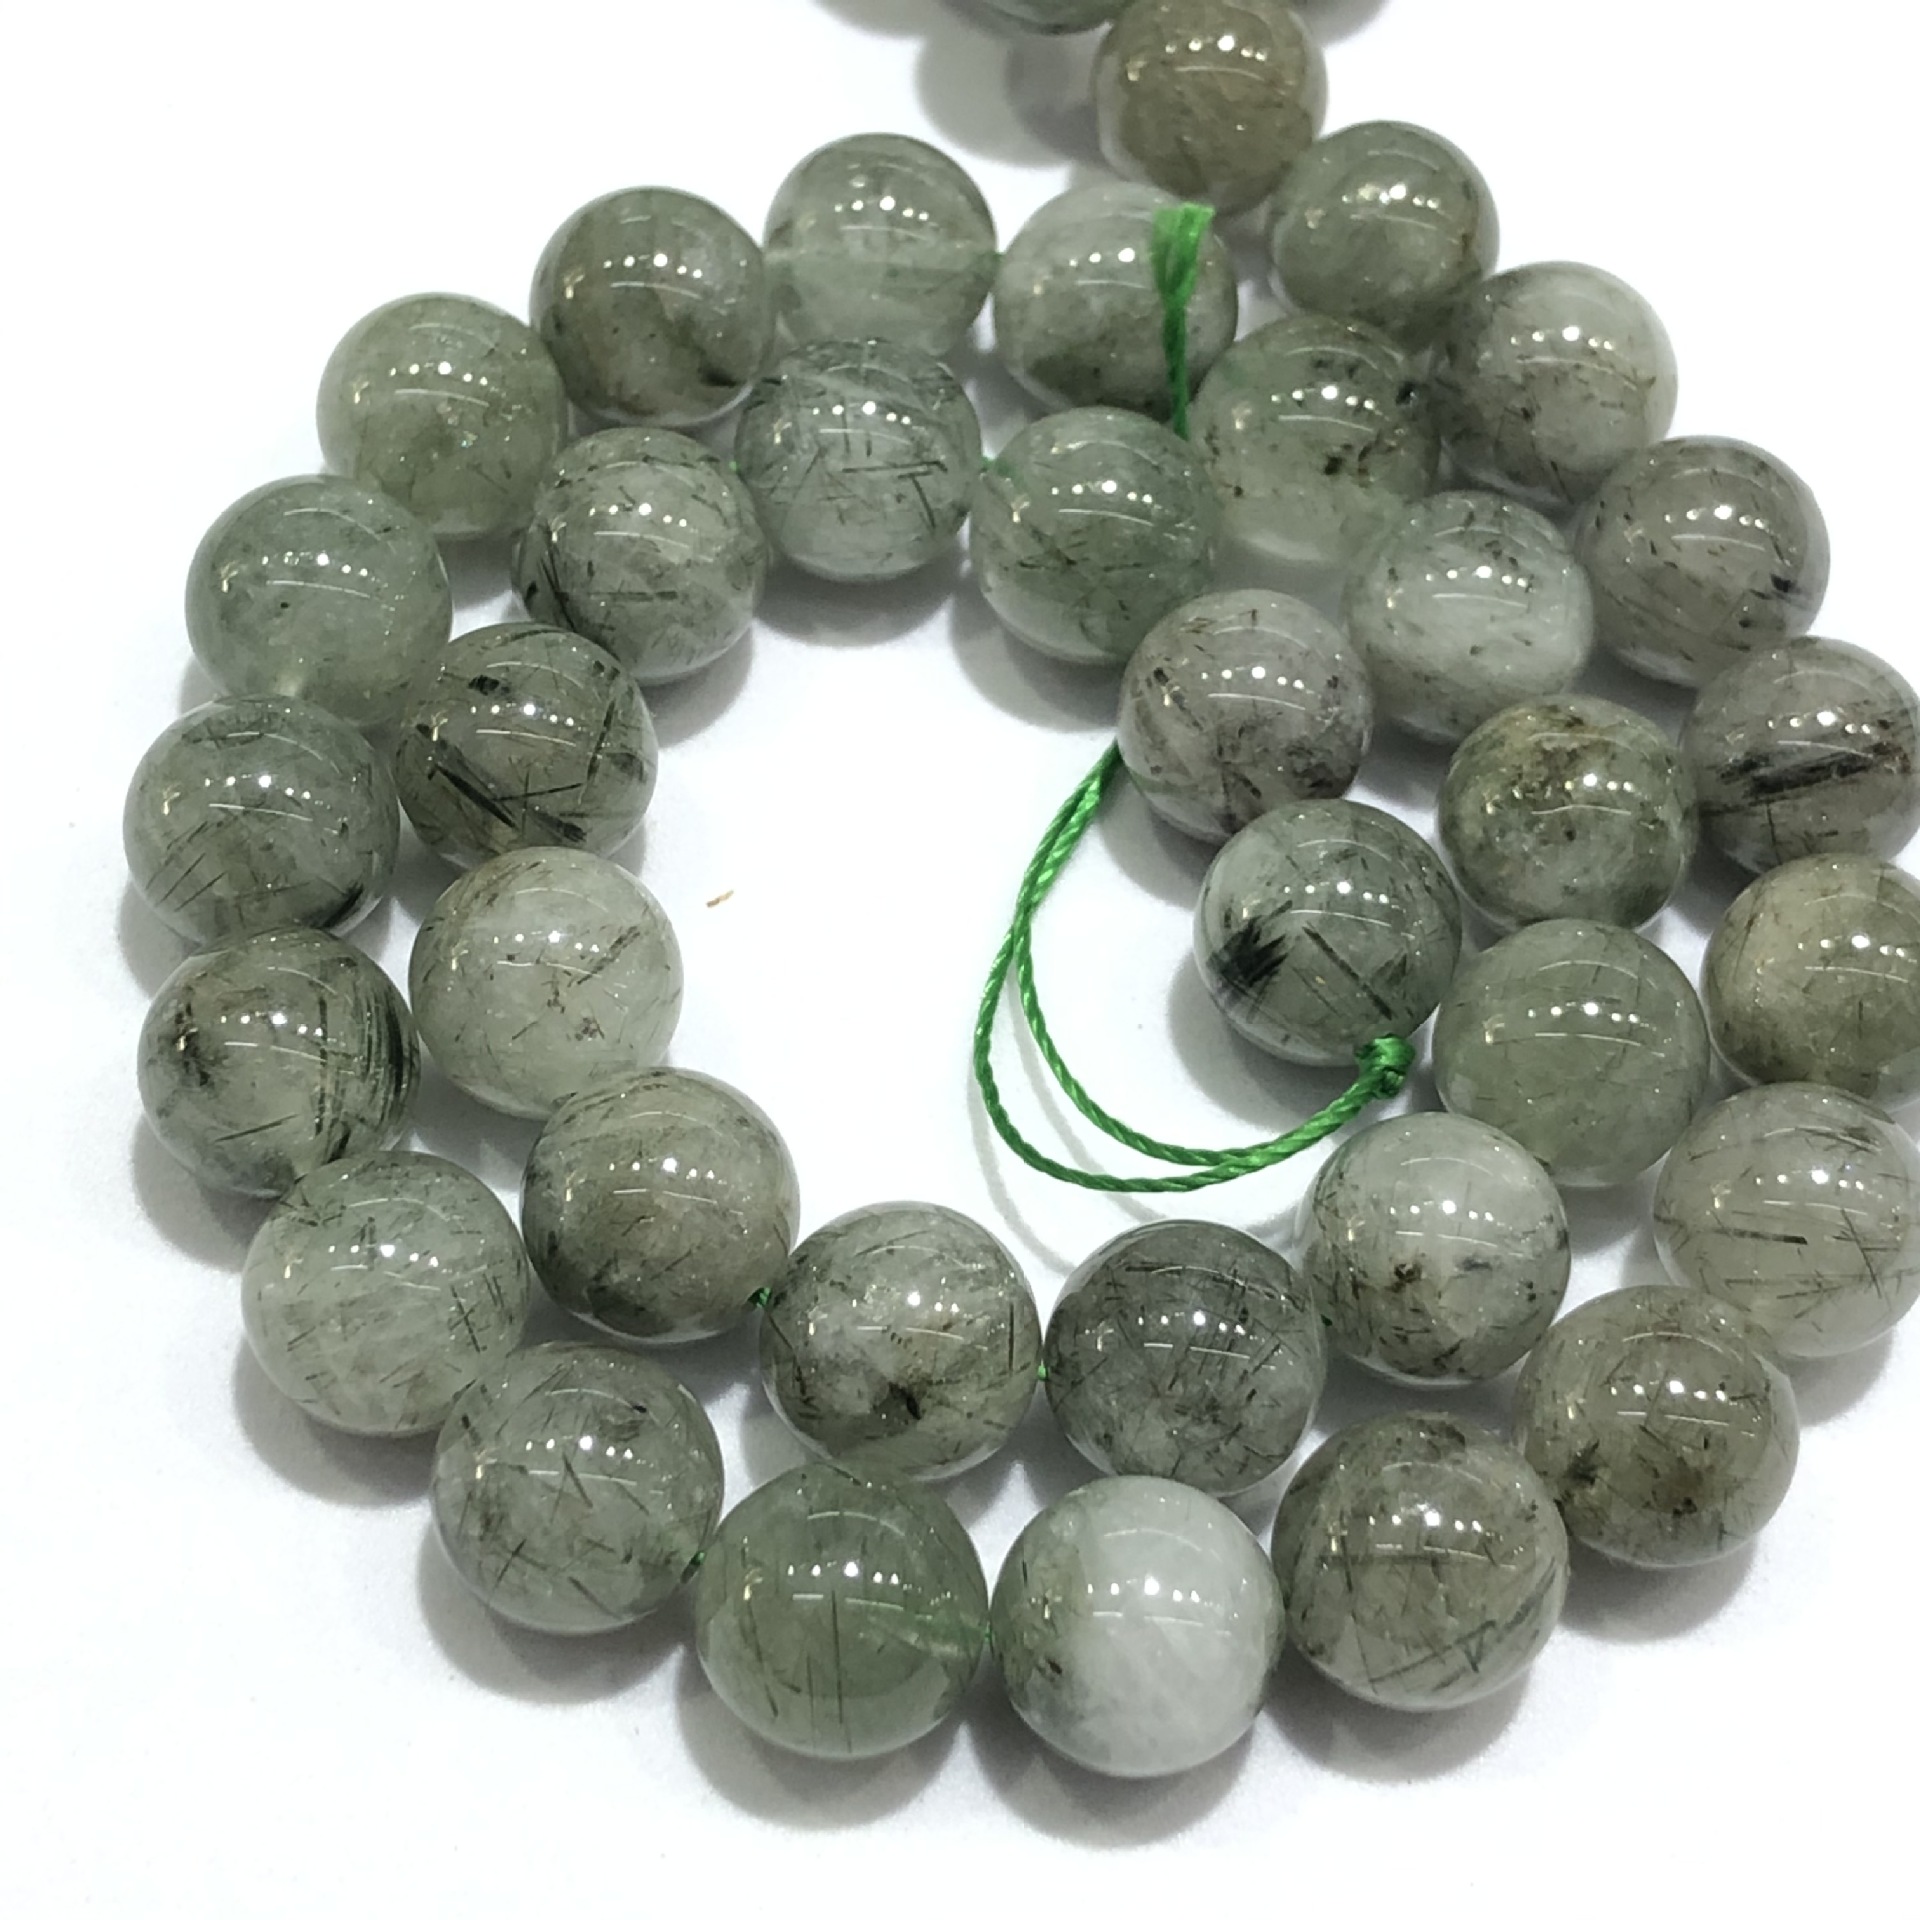 5A green hair crystal 12mm